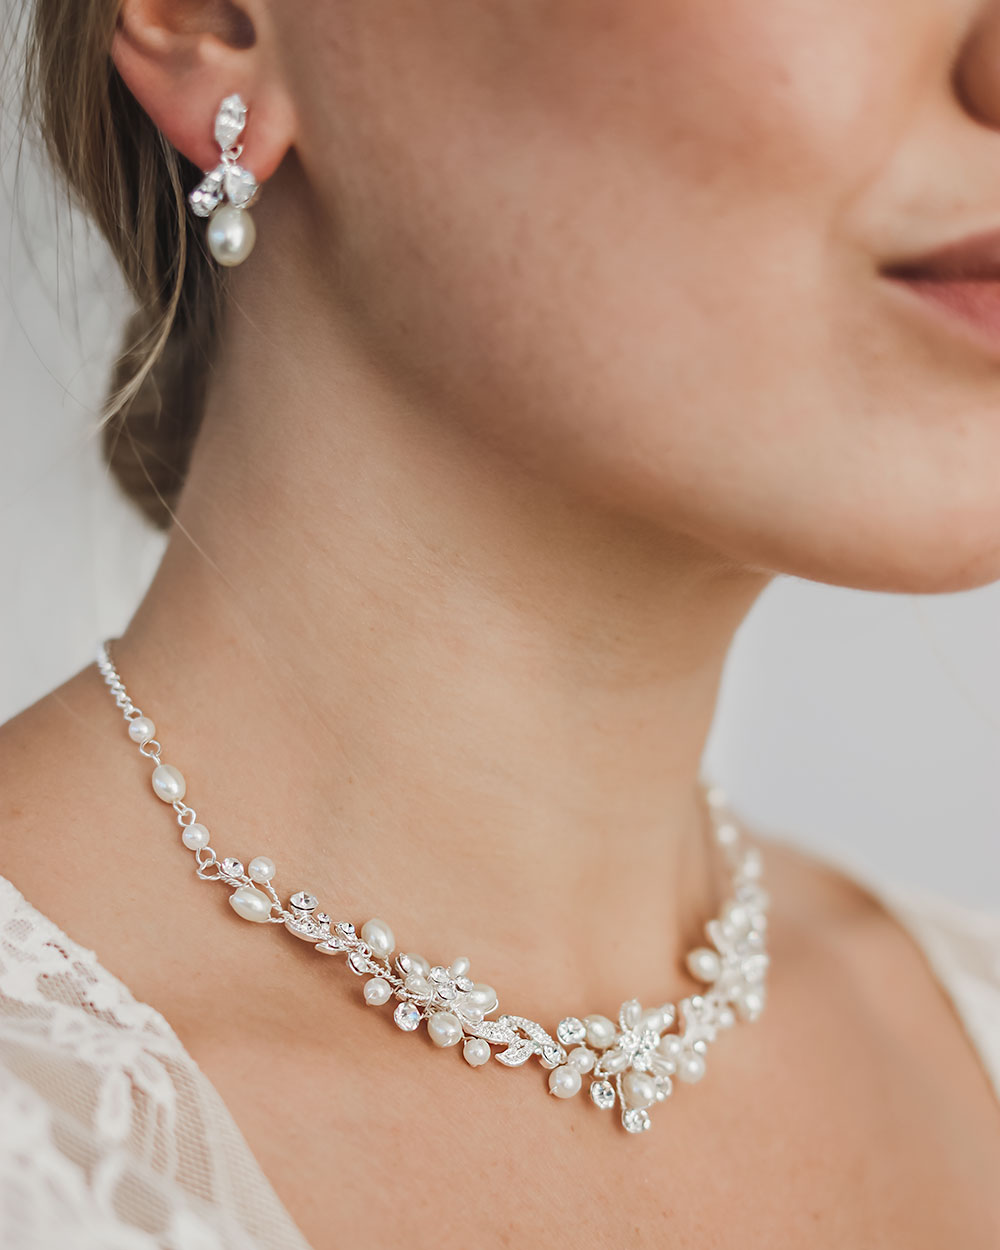 Wedding Jewelry with Pearl